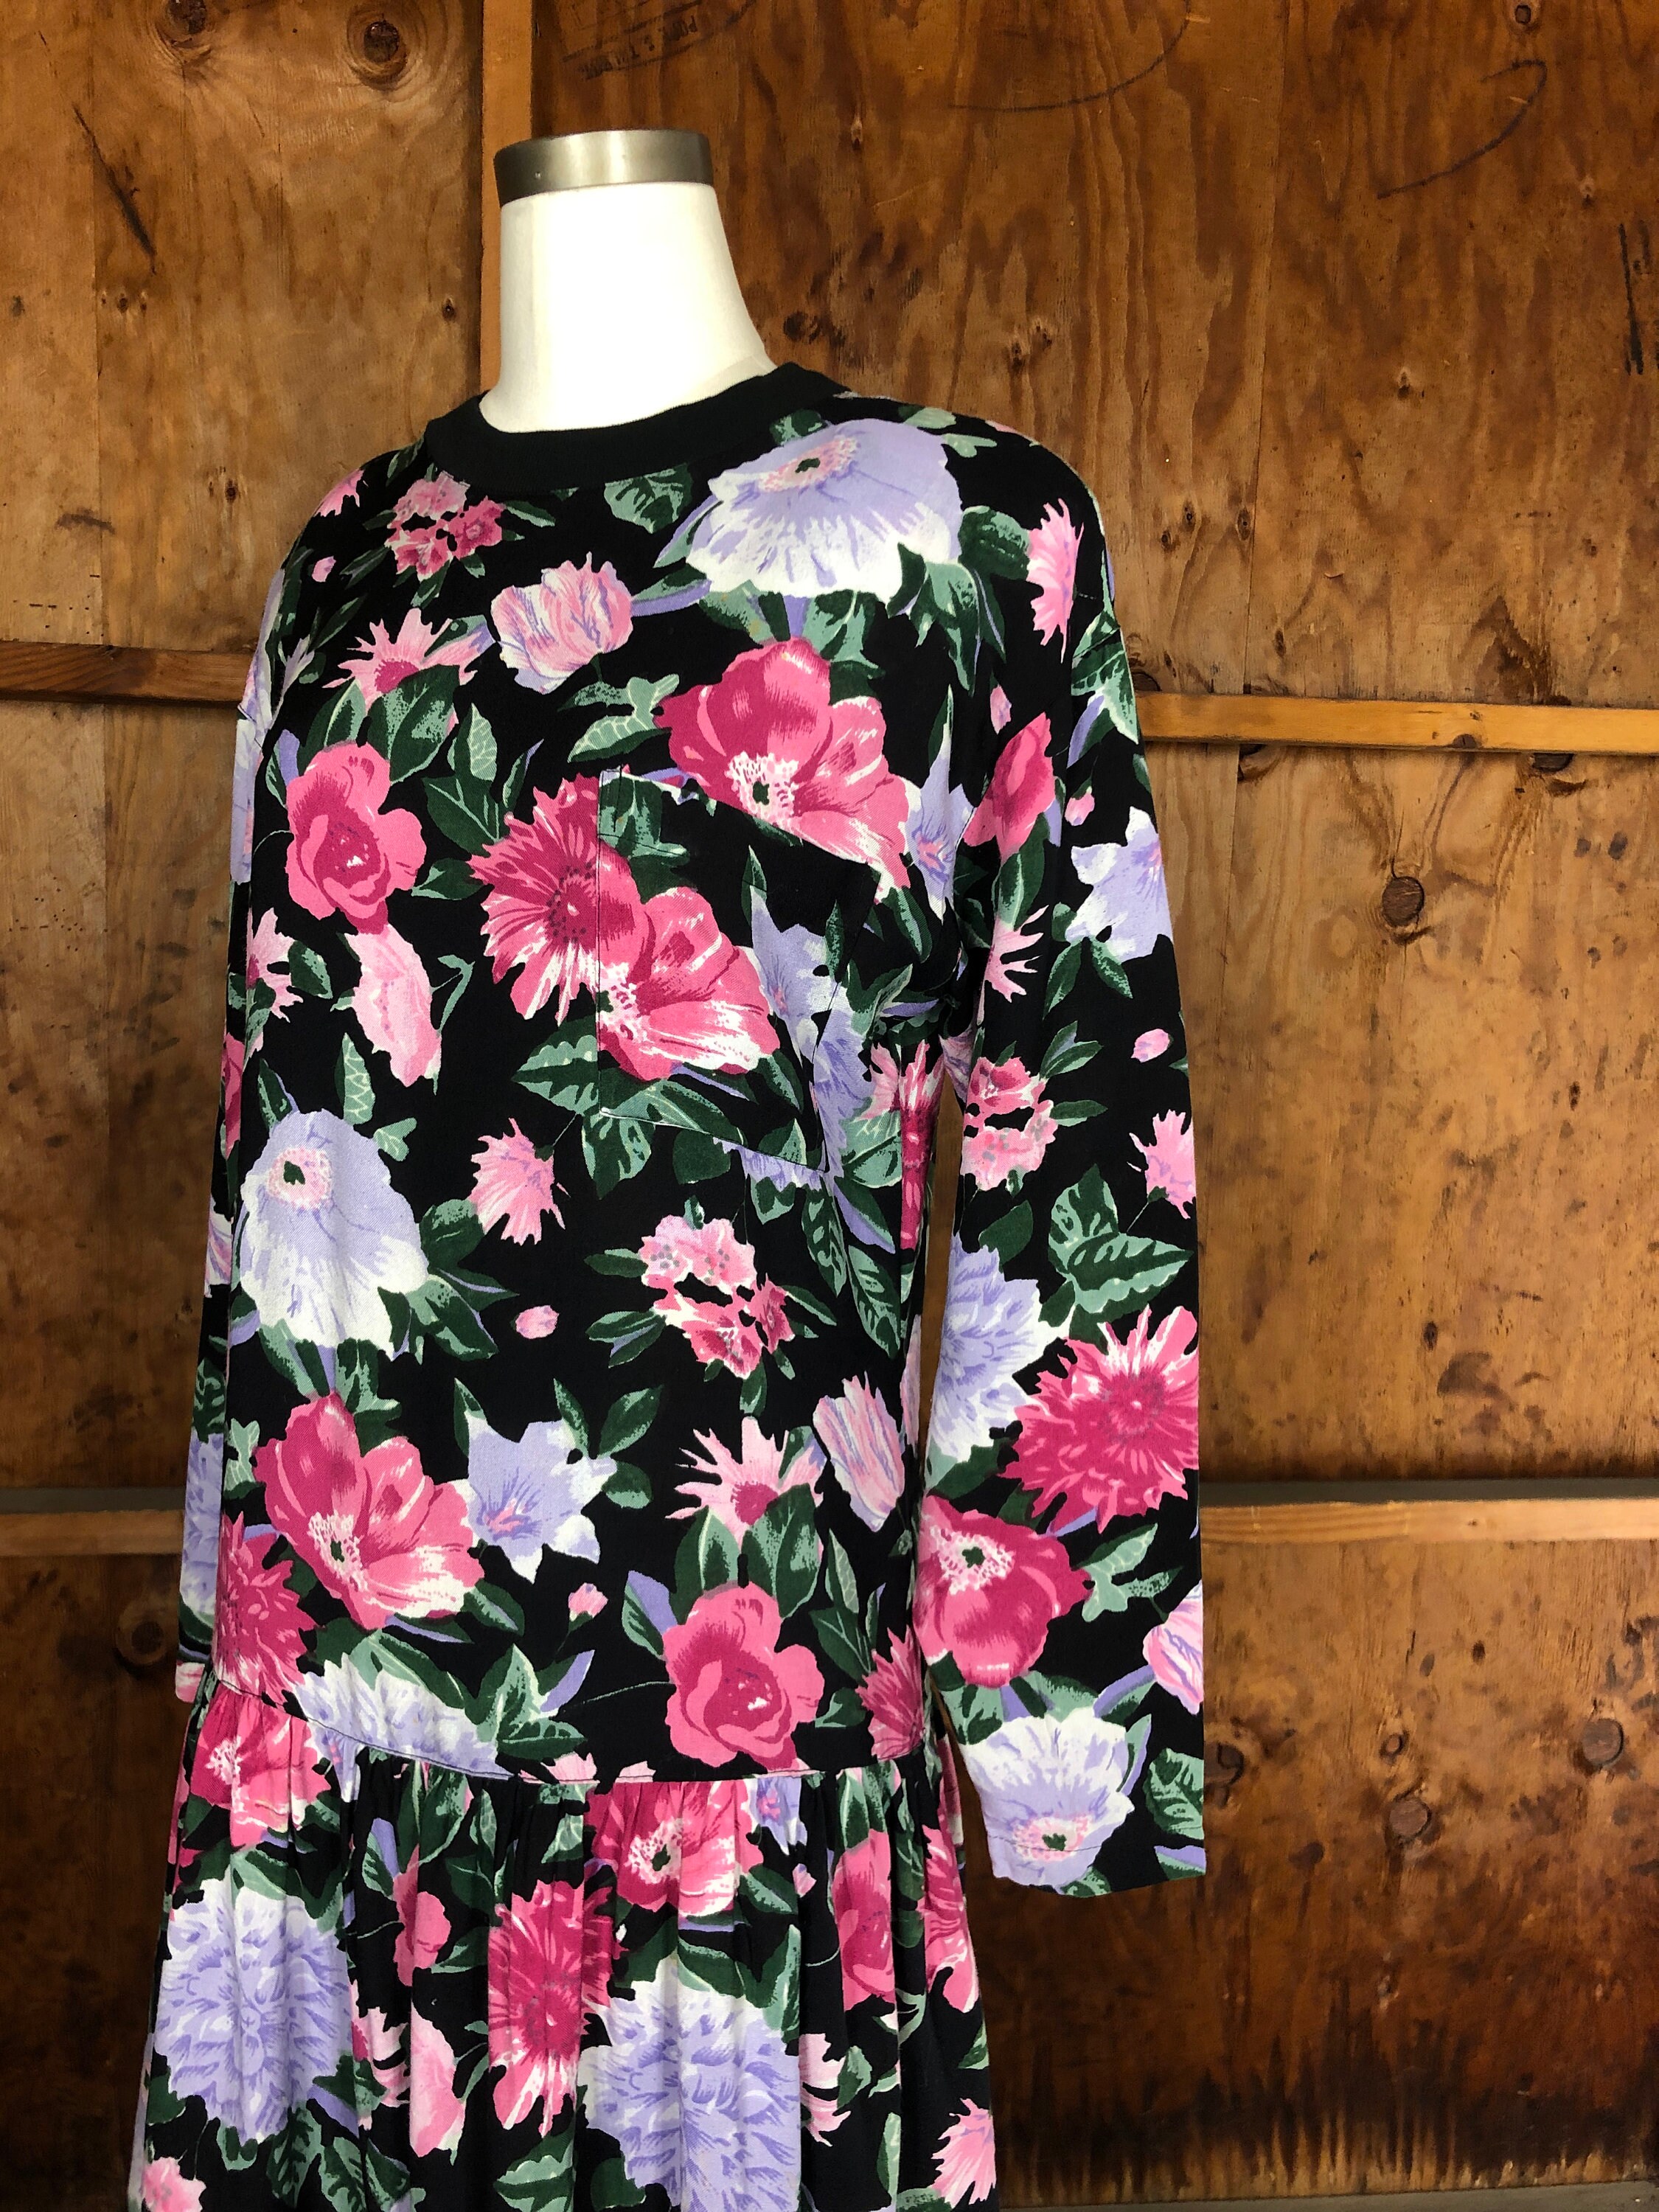 Vintage 80s Drop Waist Floral Dress S. Roberts - Etsy